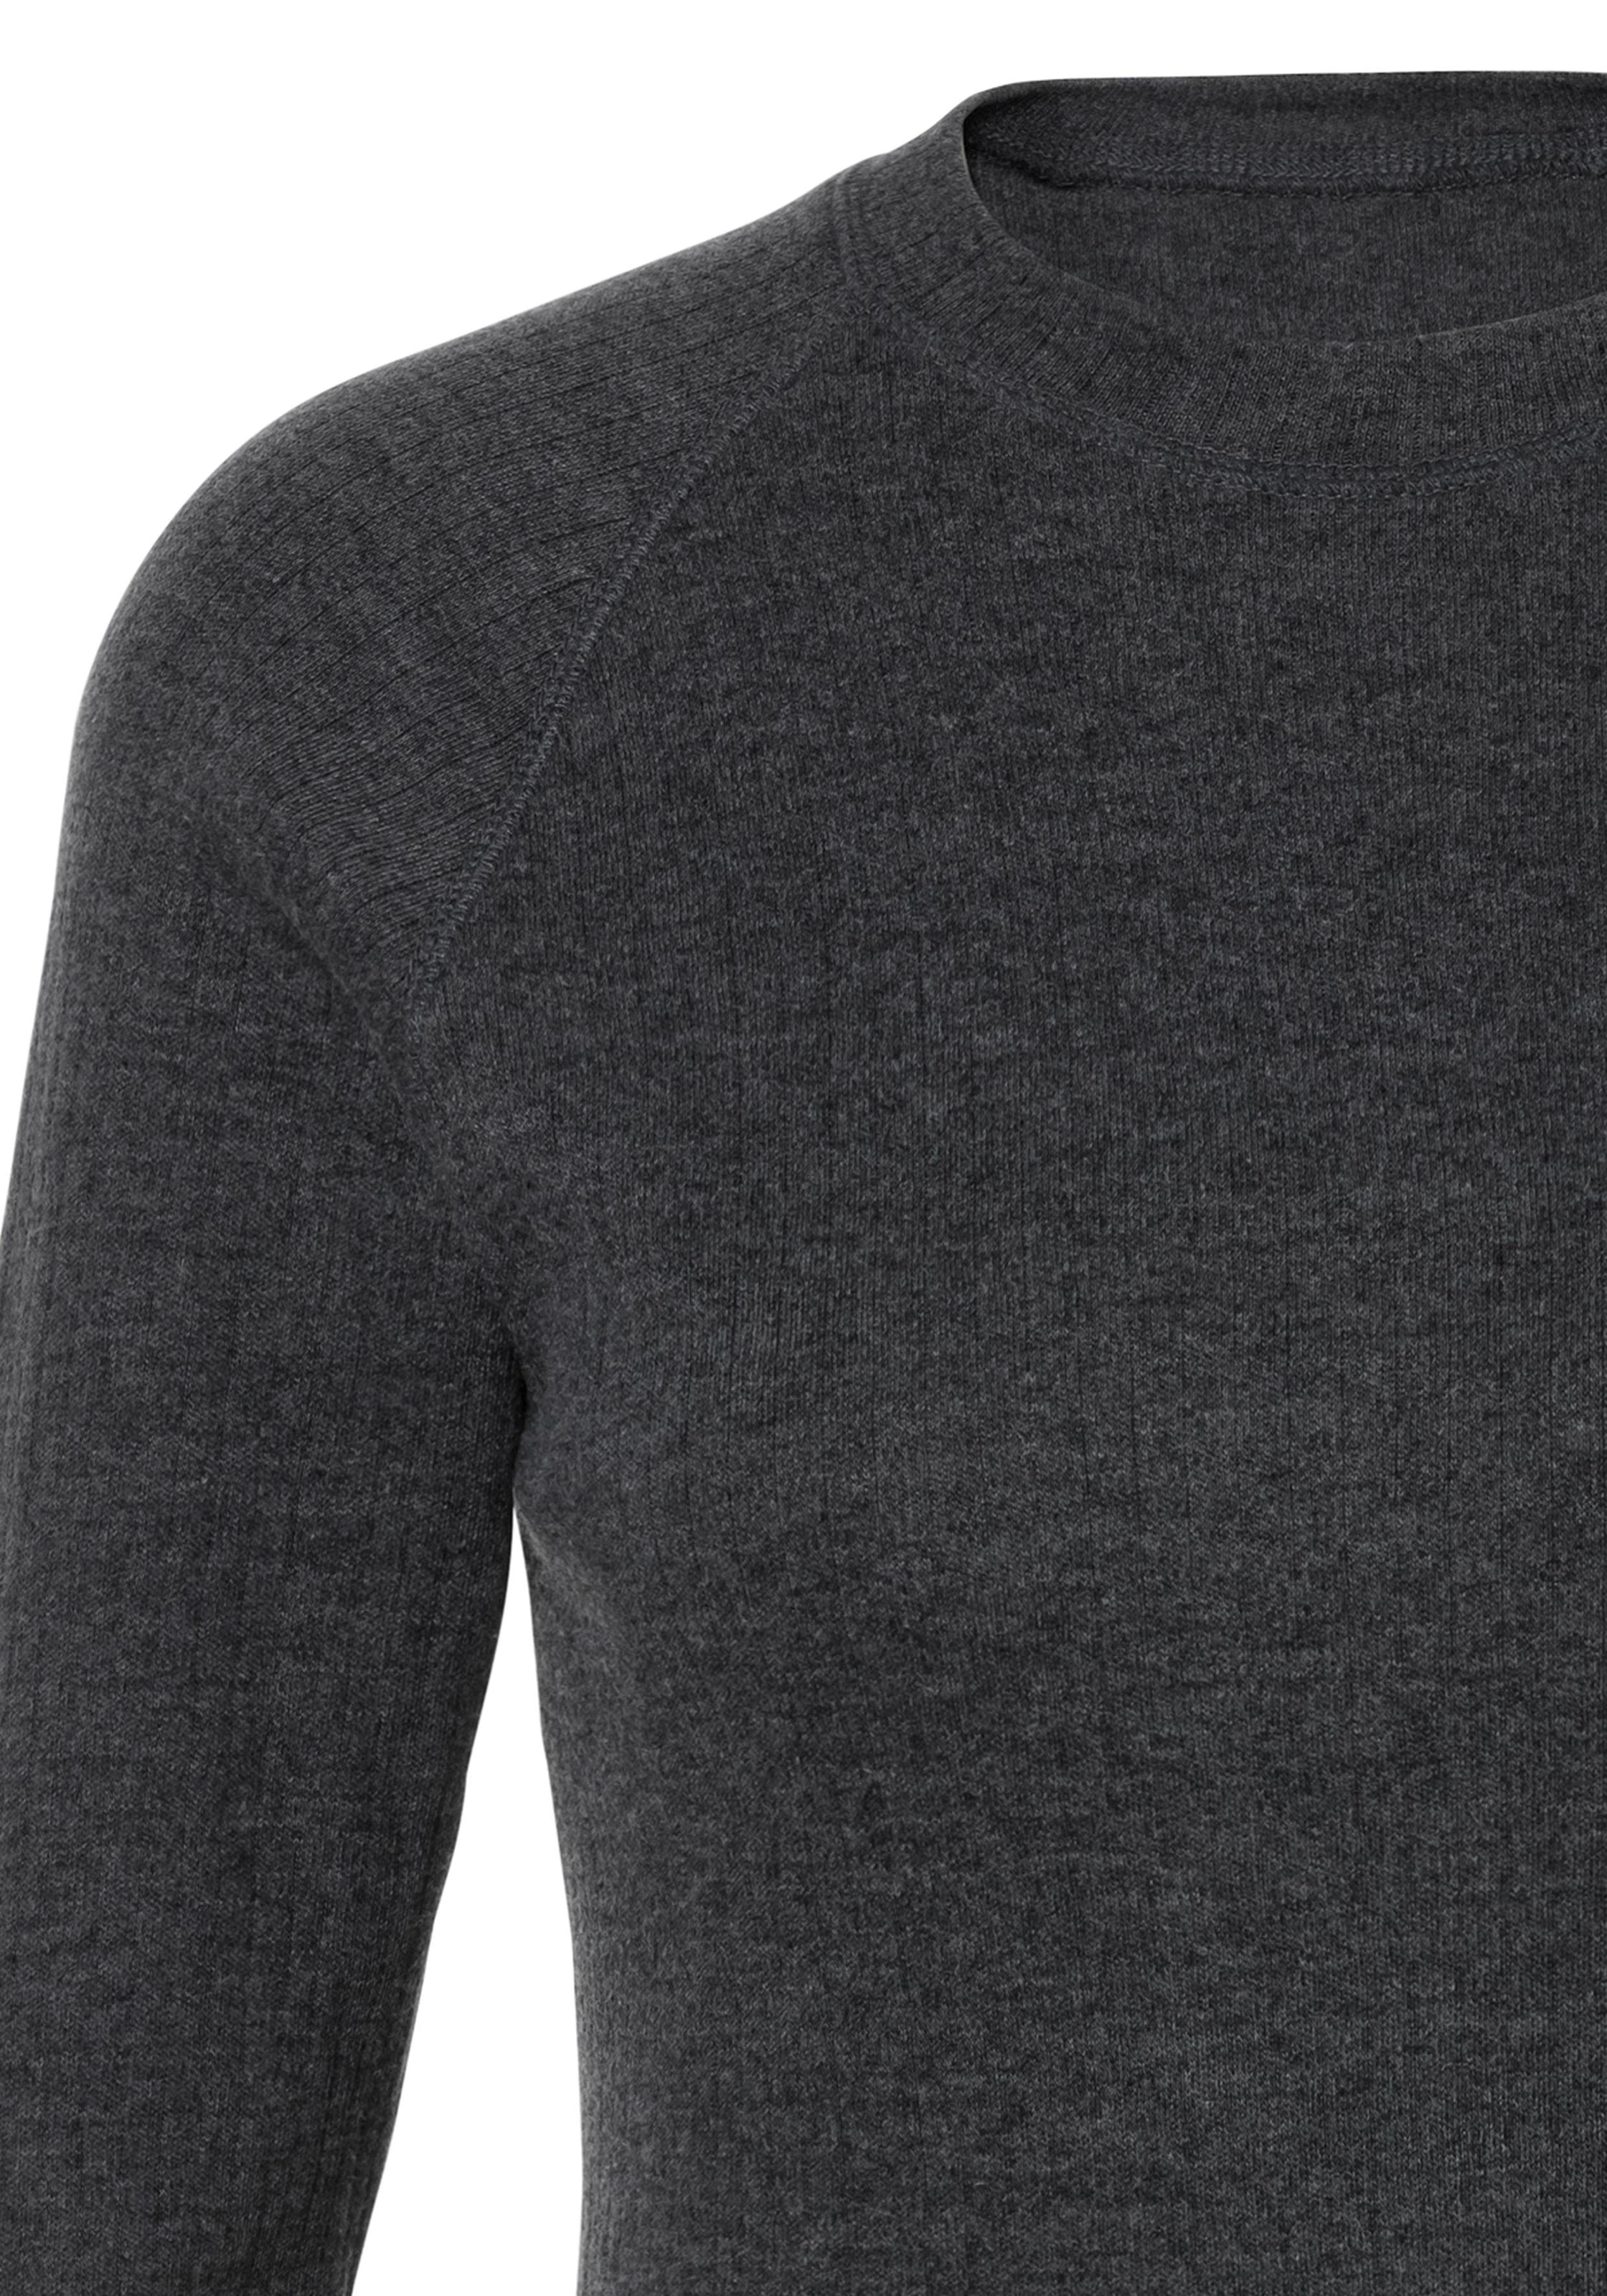 HEAT keeper Thermounterhemd »HEAT KEEPER kaufen reguliert die bequem Körpertemperatur Damen«